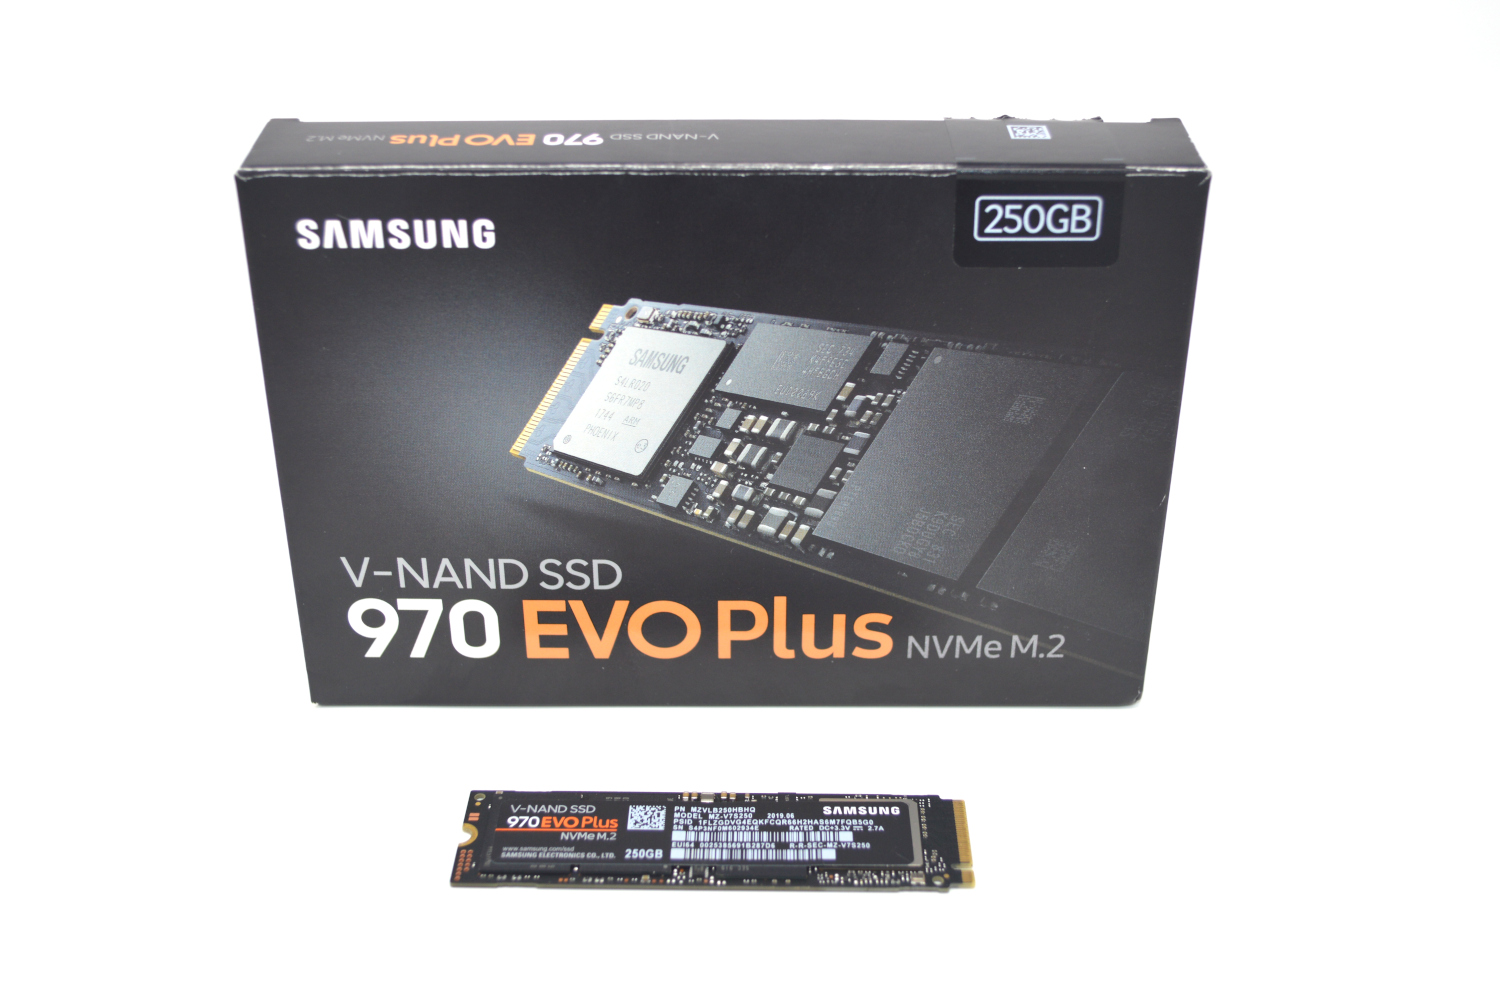 Kangaroo Saga Painkiller Samsung 970 EVO Plus 250GB NVMe SSD Review - ServeTheHome